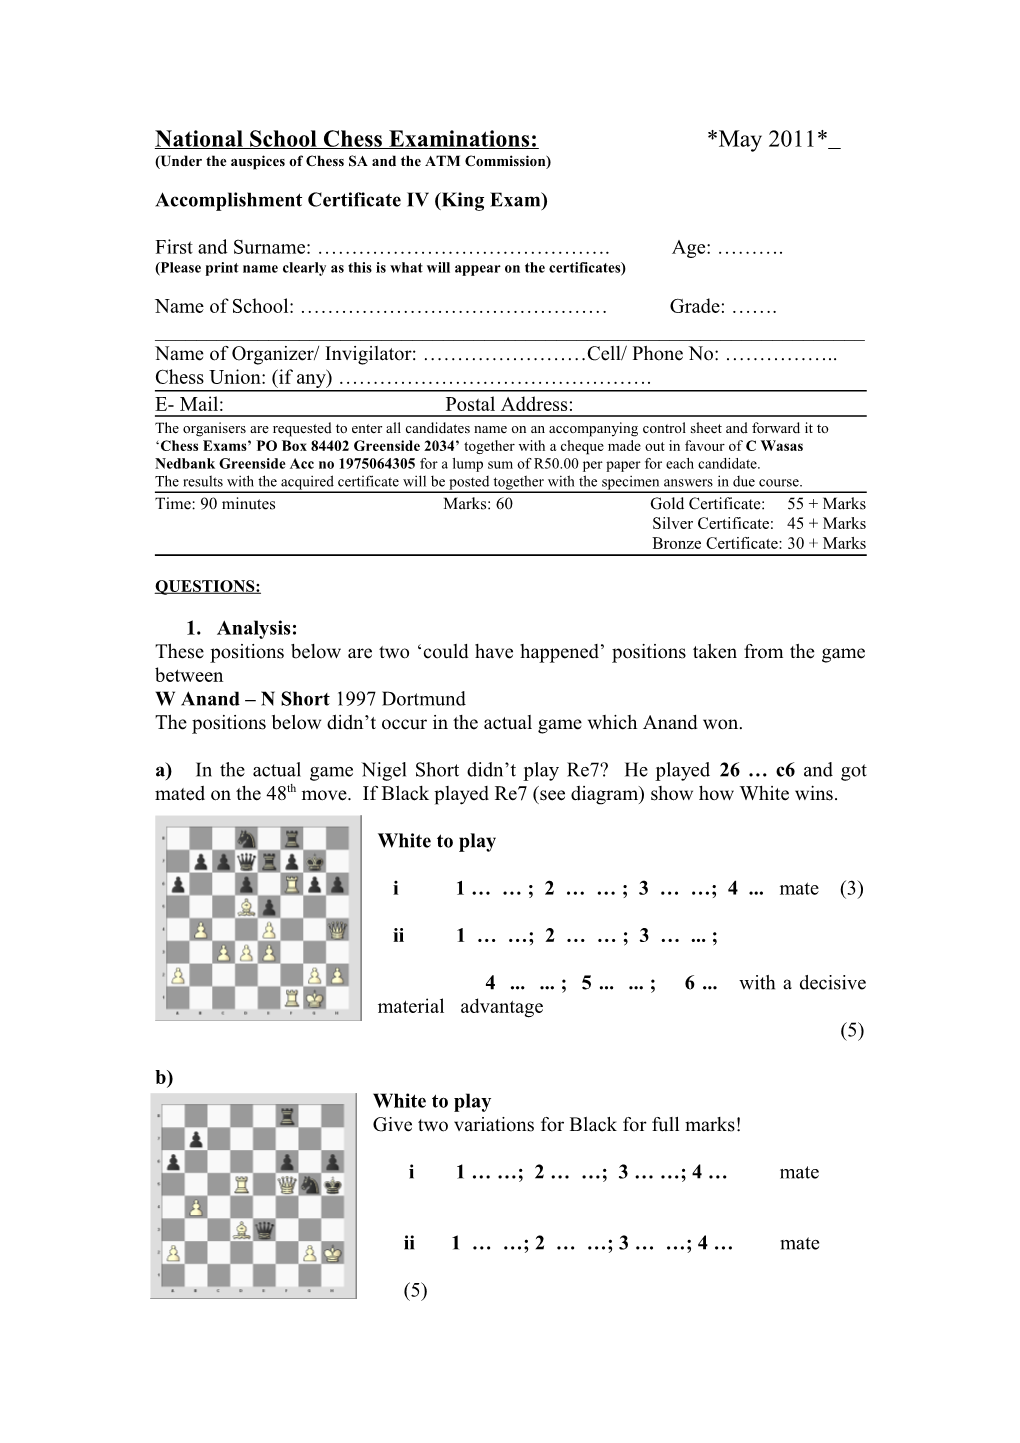 National School Chess Examinations: *May 2011*